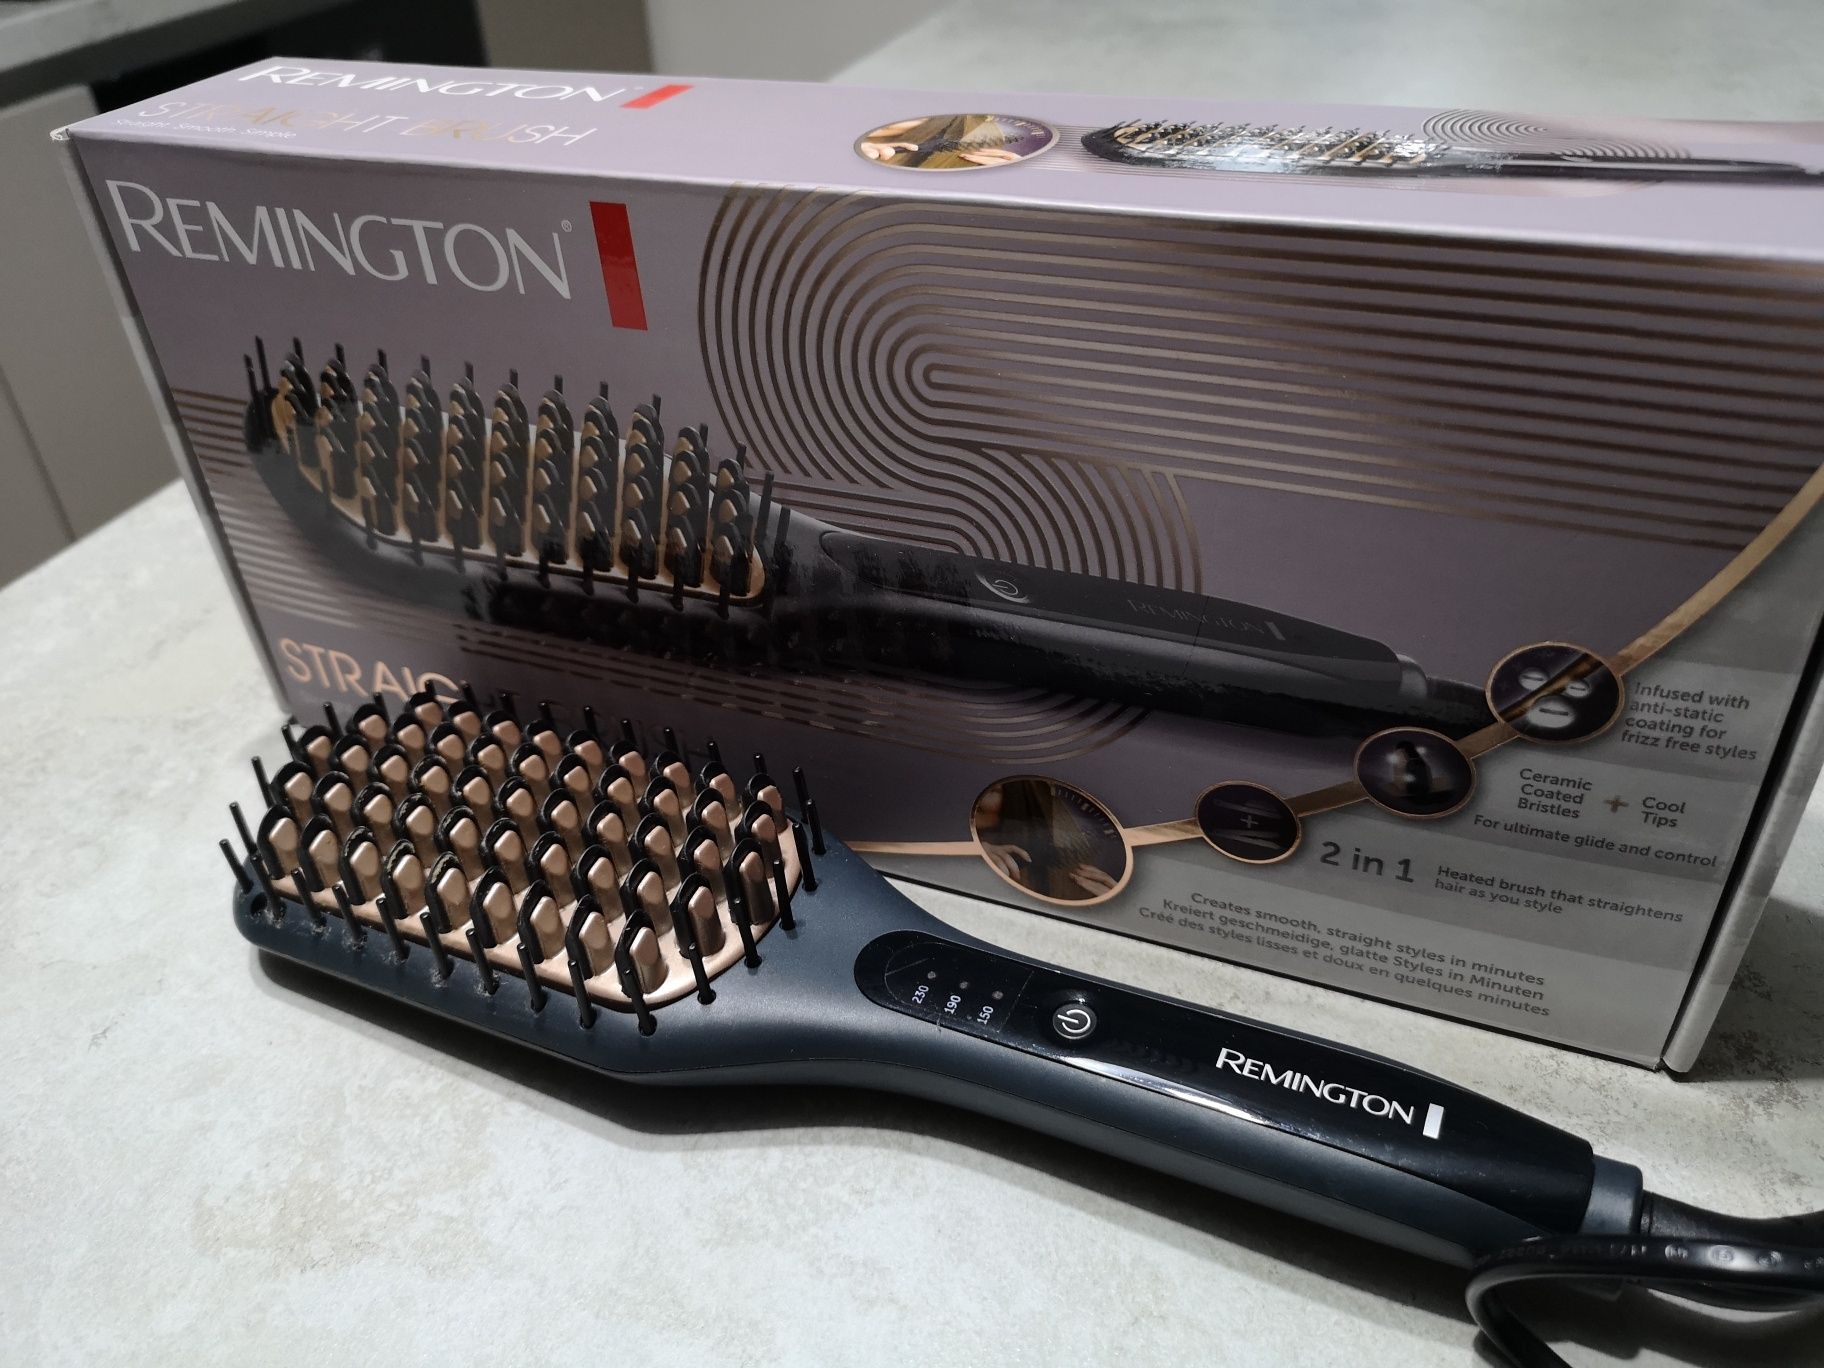 Remington Straight Brush utilizat ft putin